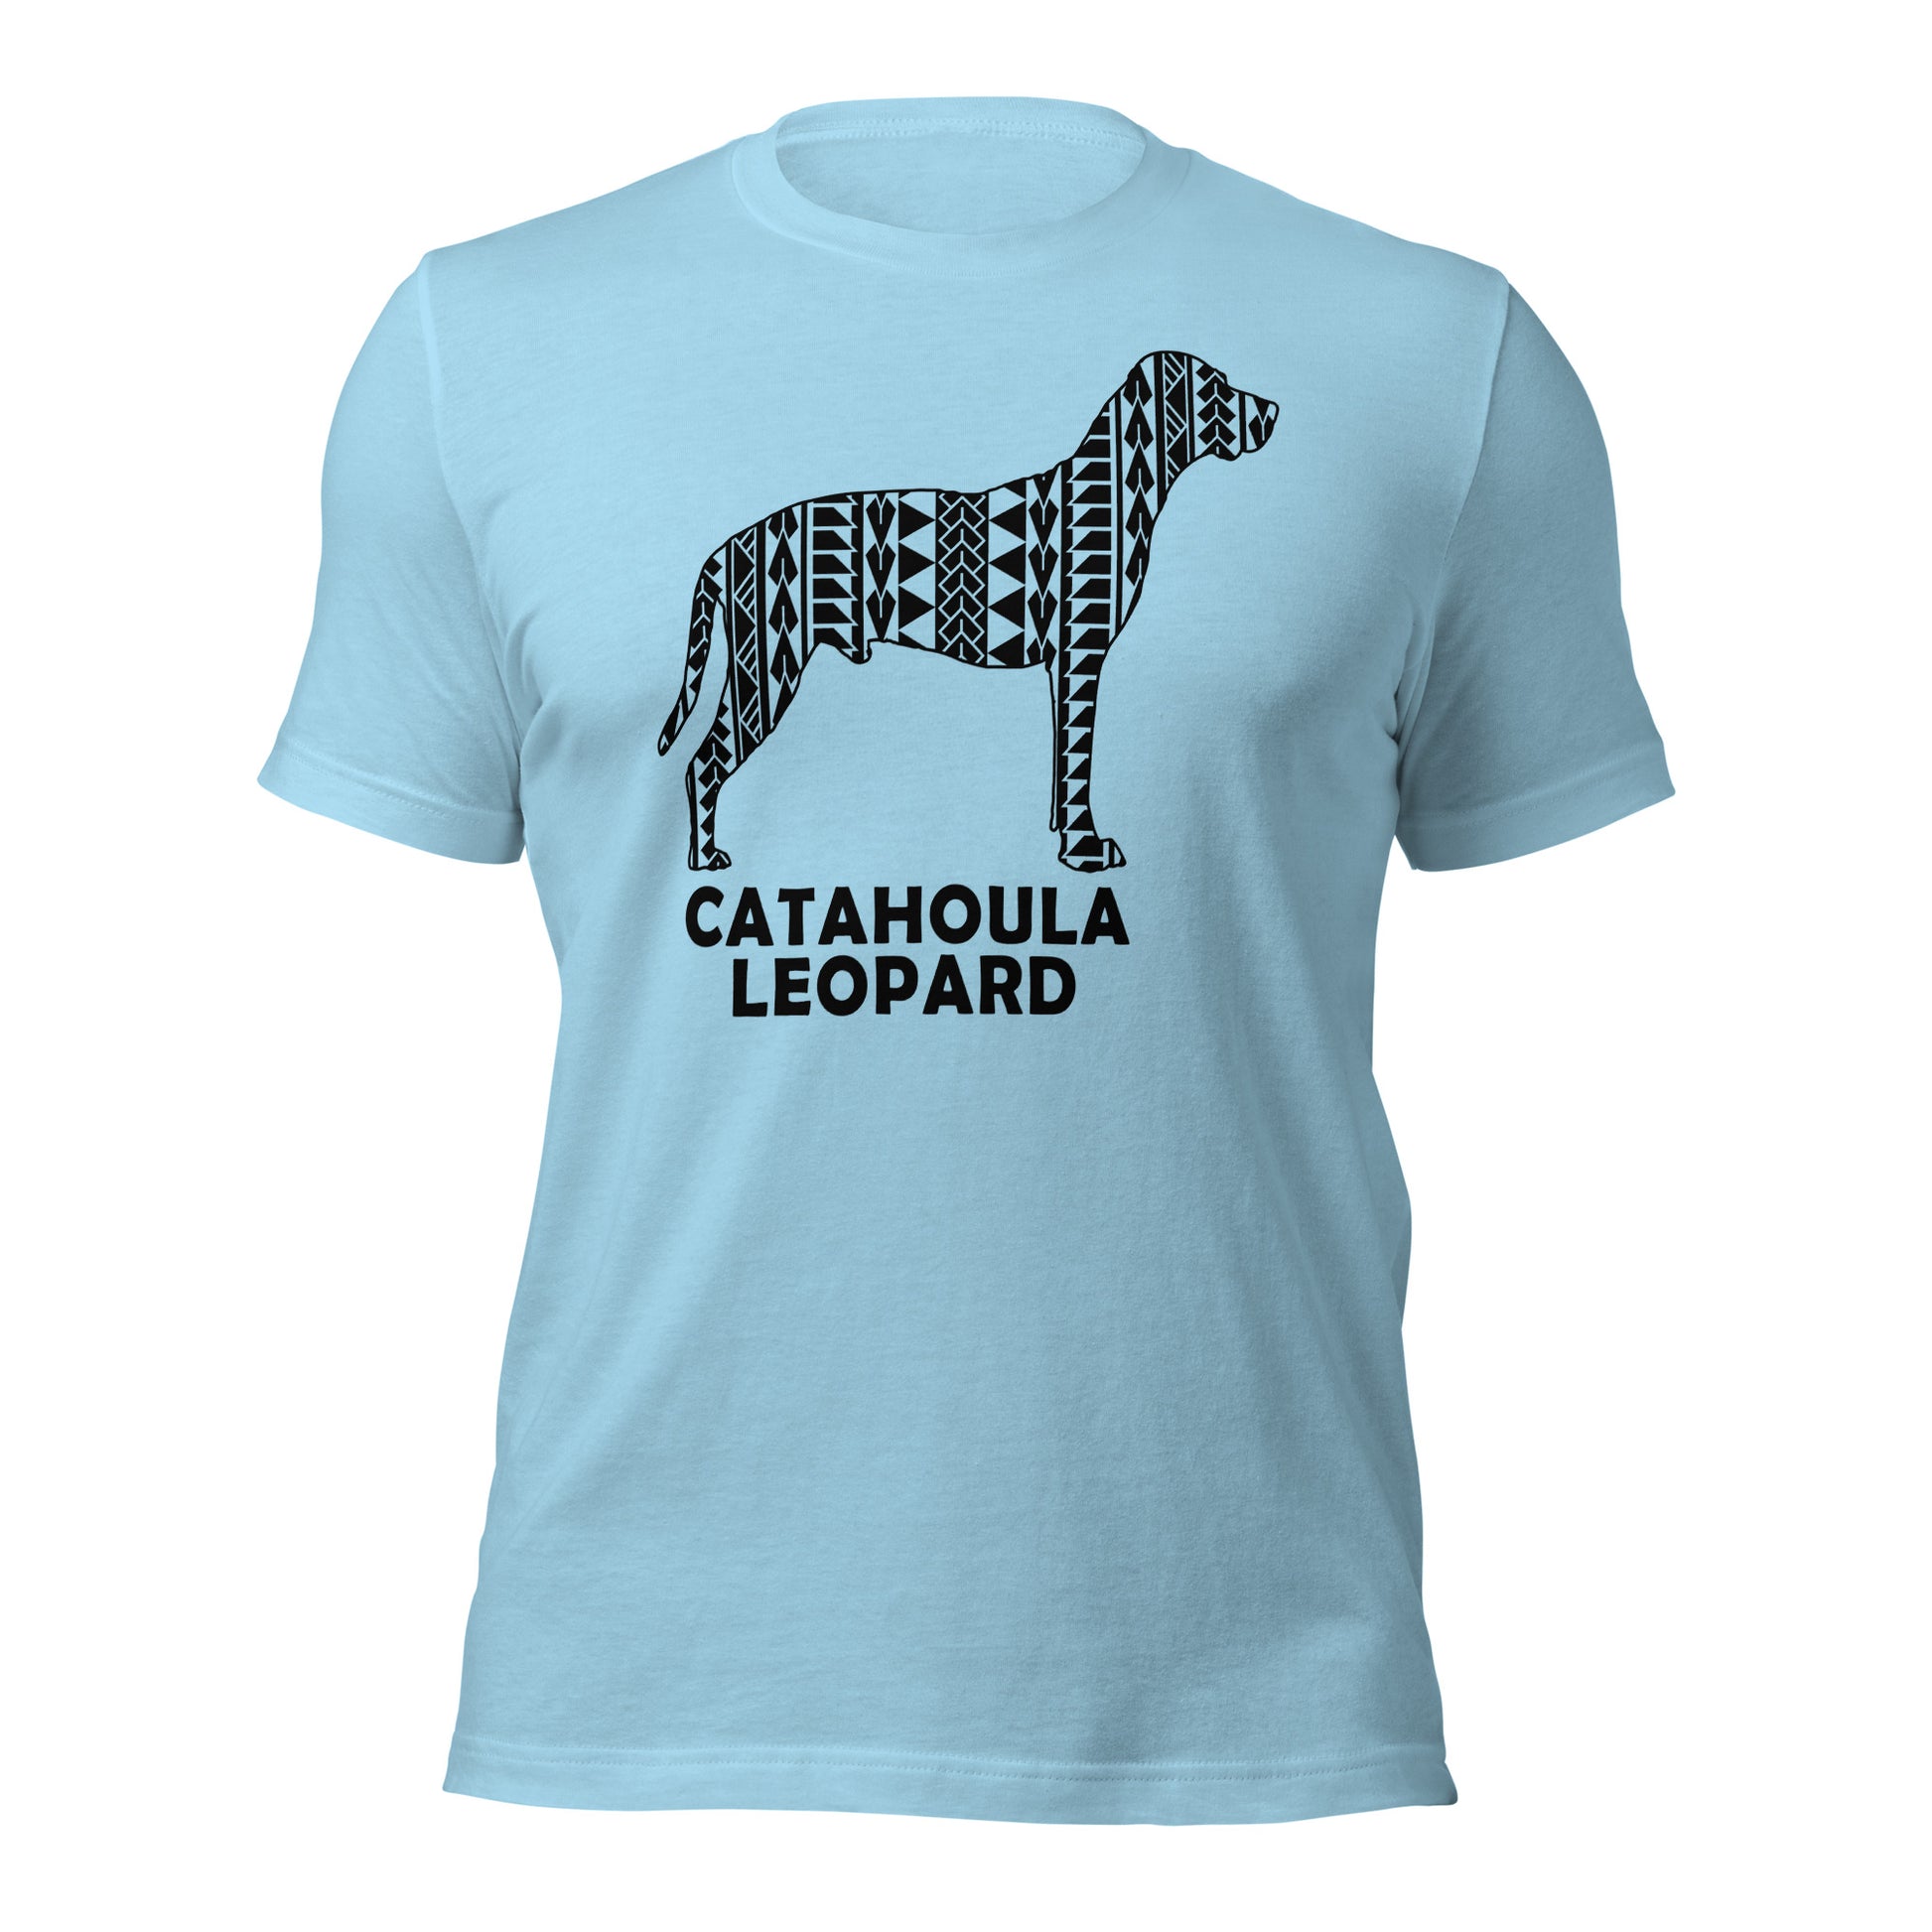 Catahoula Leopard Polynesian t-shirt blue by Dog Artistry.